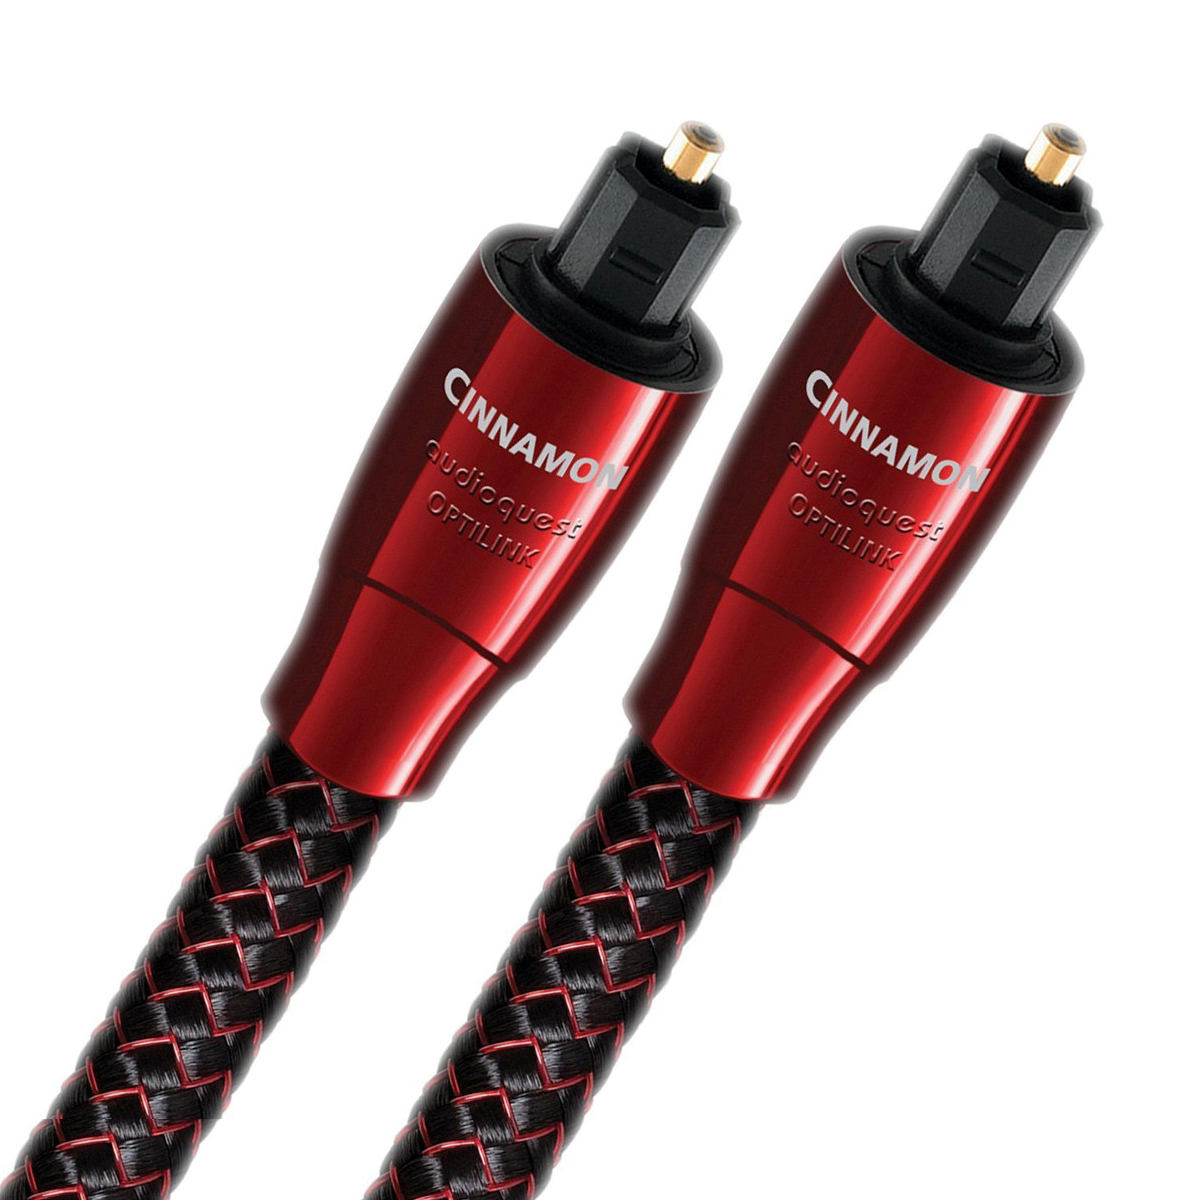 AudioQuest Cinnamon - Optical/Toslink Cable - AVStore